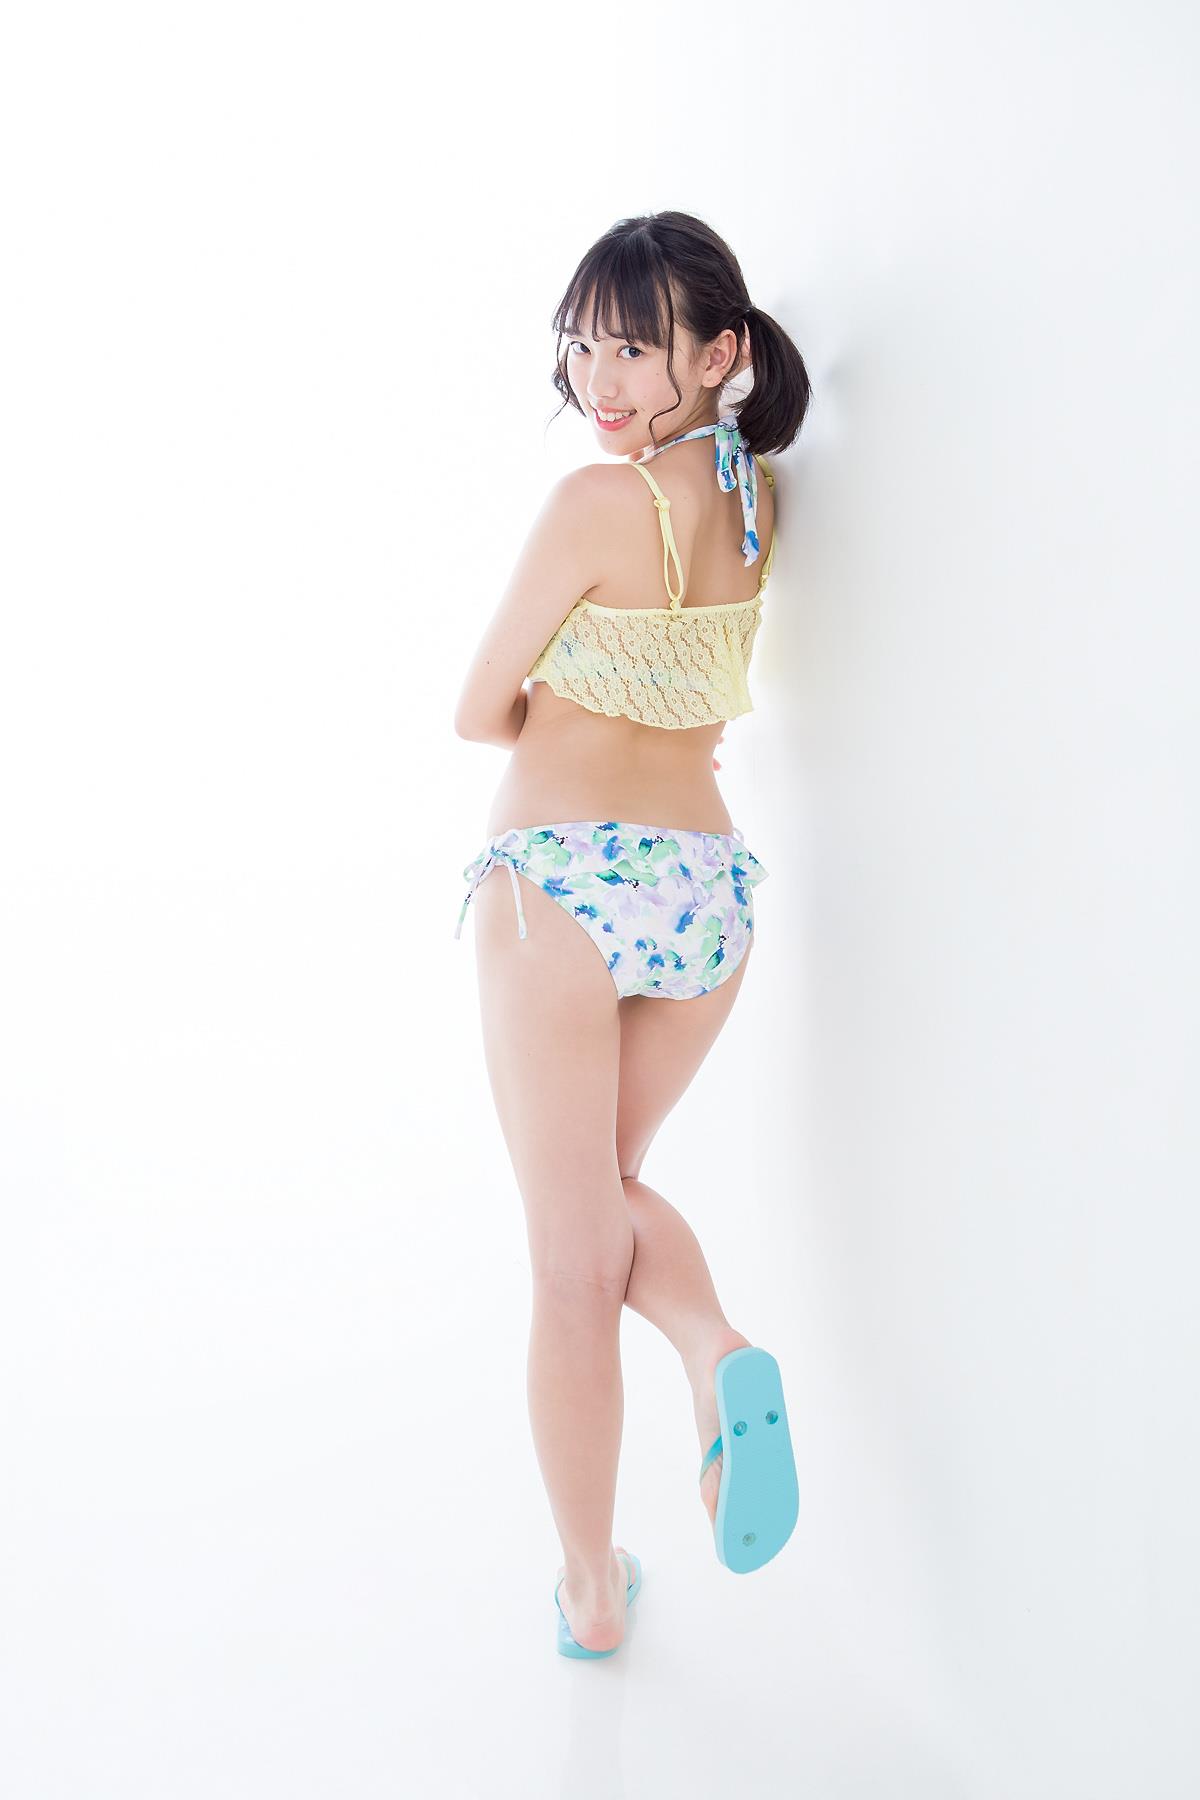 Minisuka.tv Sarina Kashiwagi 柏木さりな Premium Gallery 2.8 - 23.jpg